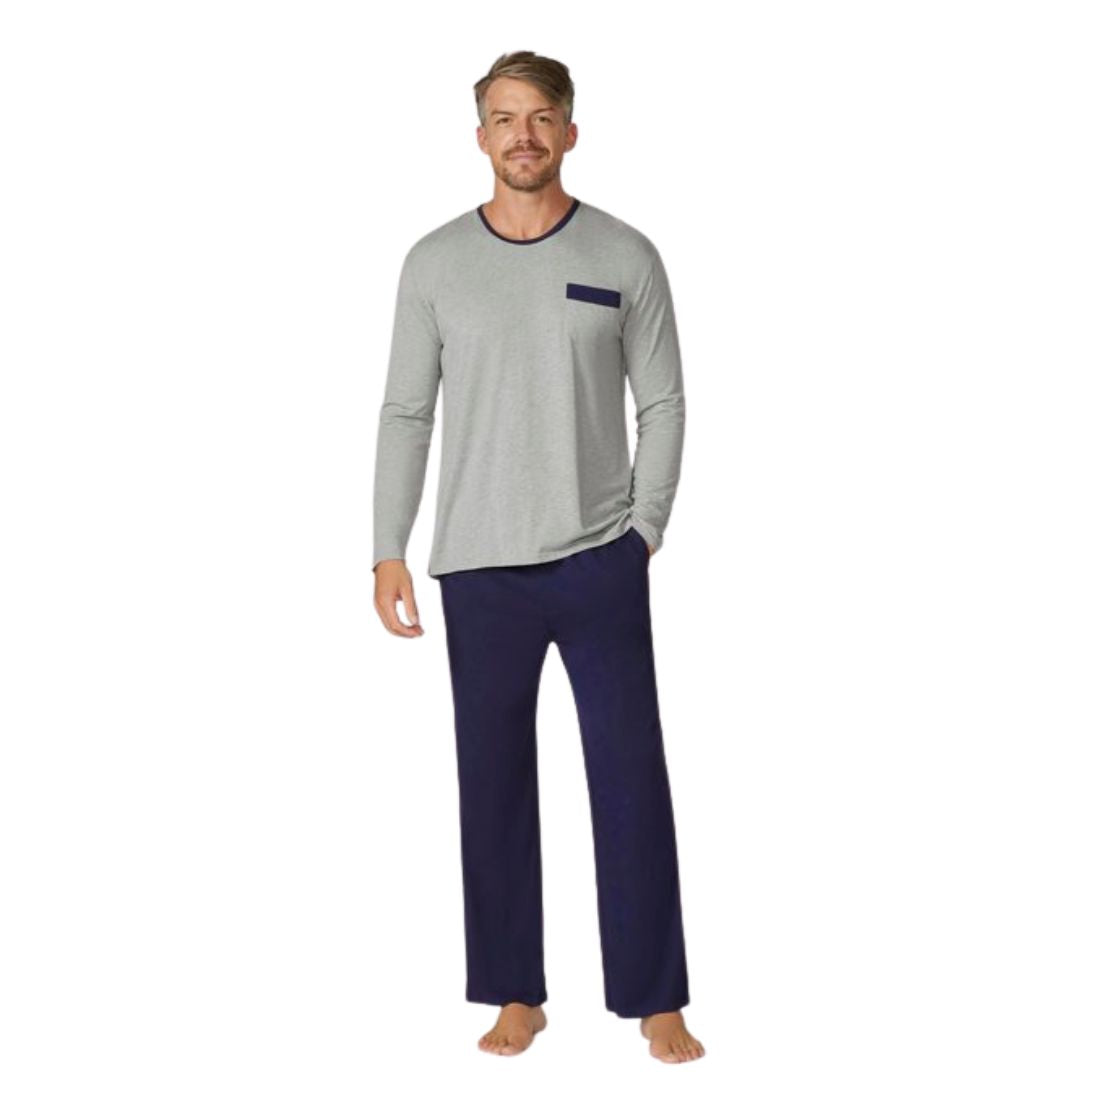 Bamboo Full Length Pyjamas Navy/Grey Mens Sleepwear by Contare | The Bloke Shop